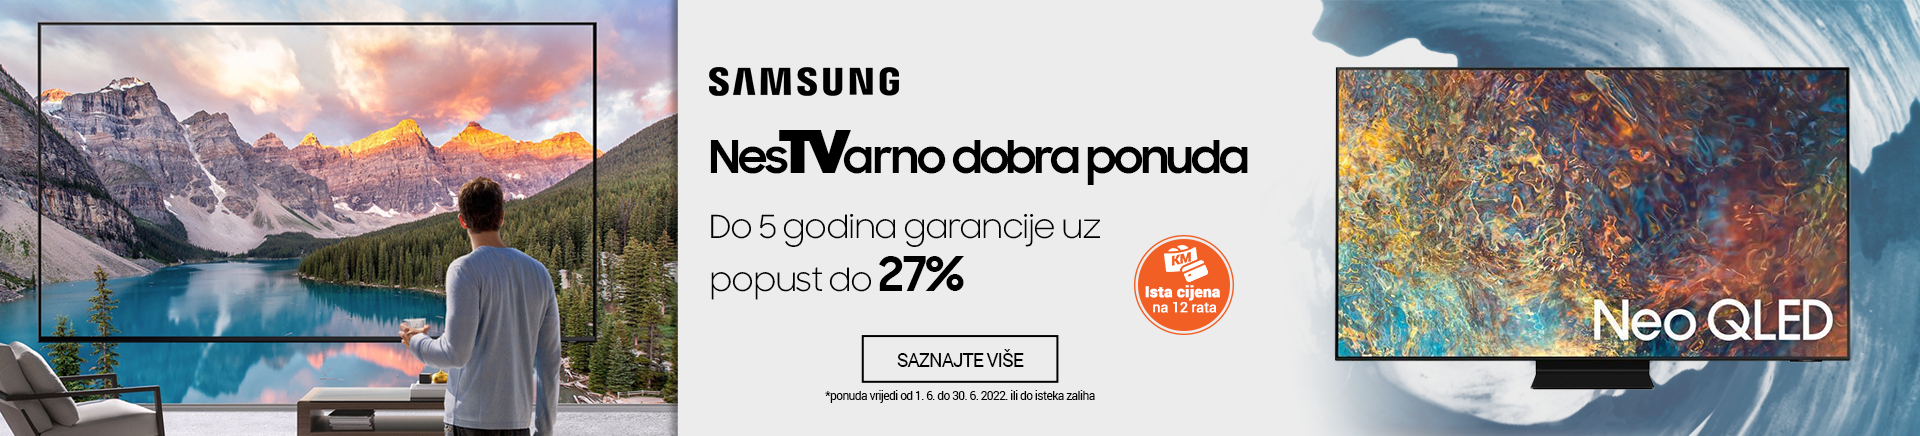 BA Samsung nesTVarno dobra ponuda MOBILE 380 X 436.png